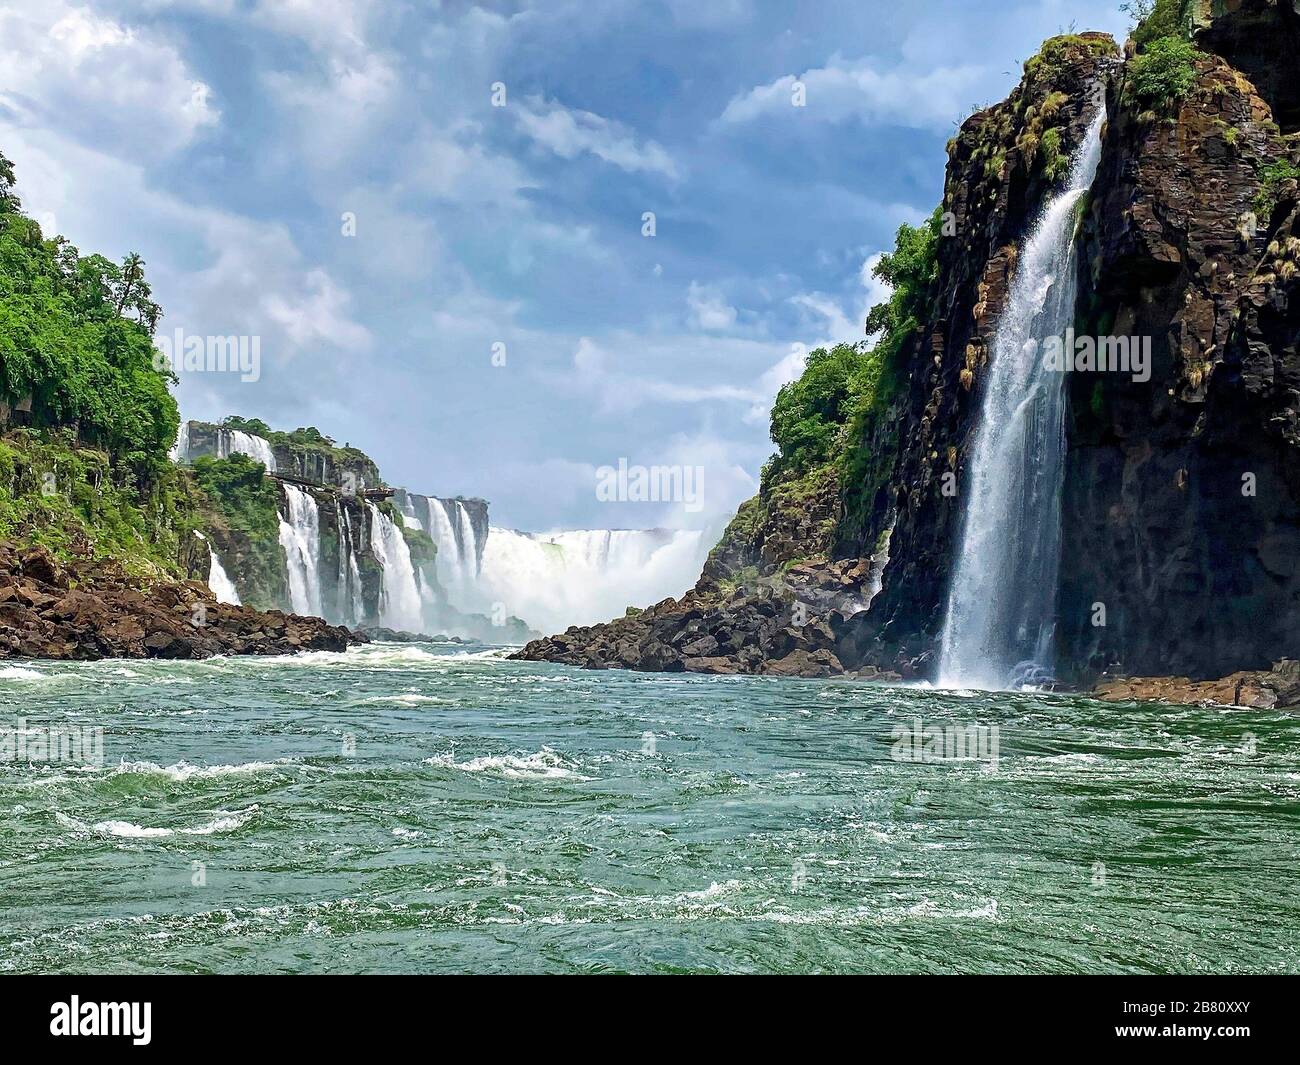 Iguassu Falls National Park; mehrere Wasserfälle, Vegetation, Fluss, Natur, hohe Klippe, mächtige, Boardwalk Overlook, Iguazu; Iguacu; South AmericaBr Stockfoto